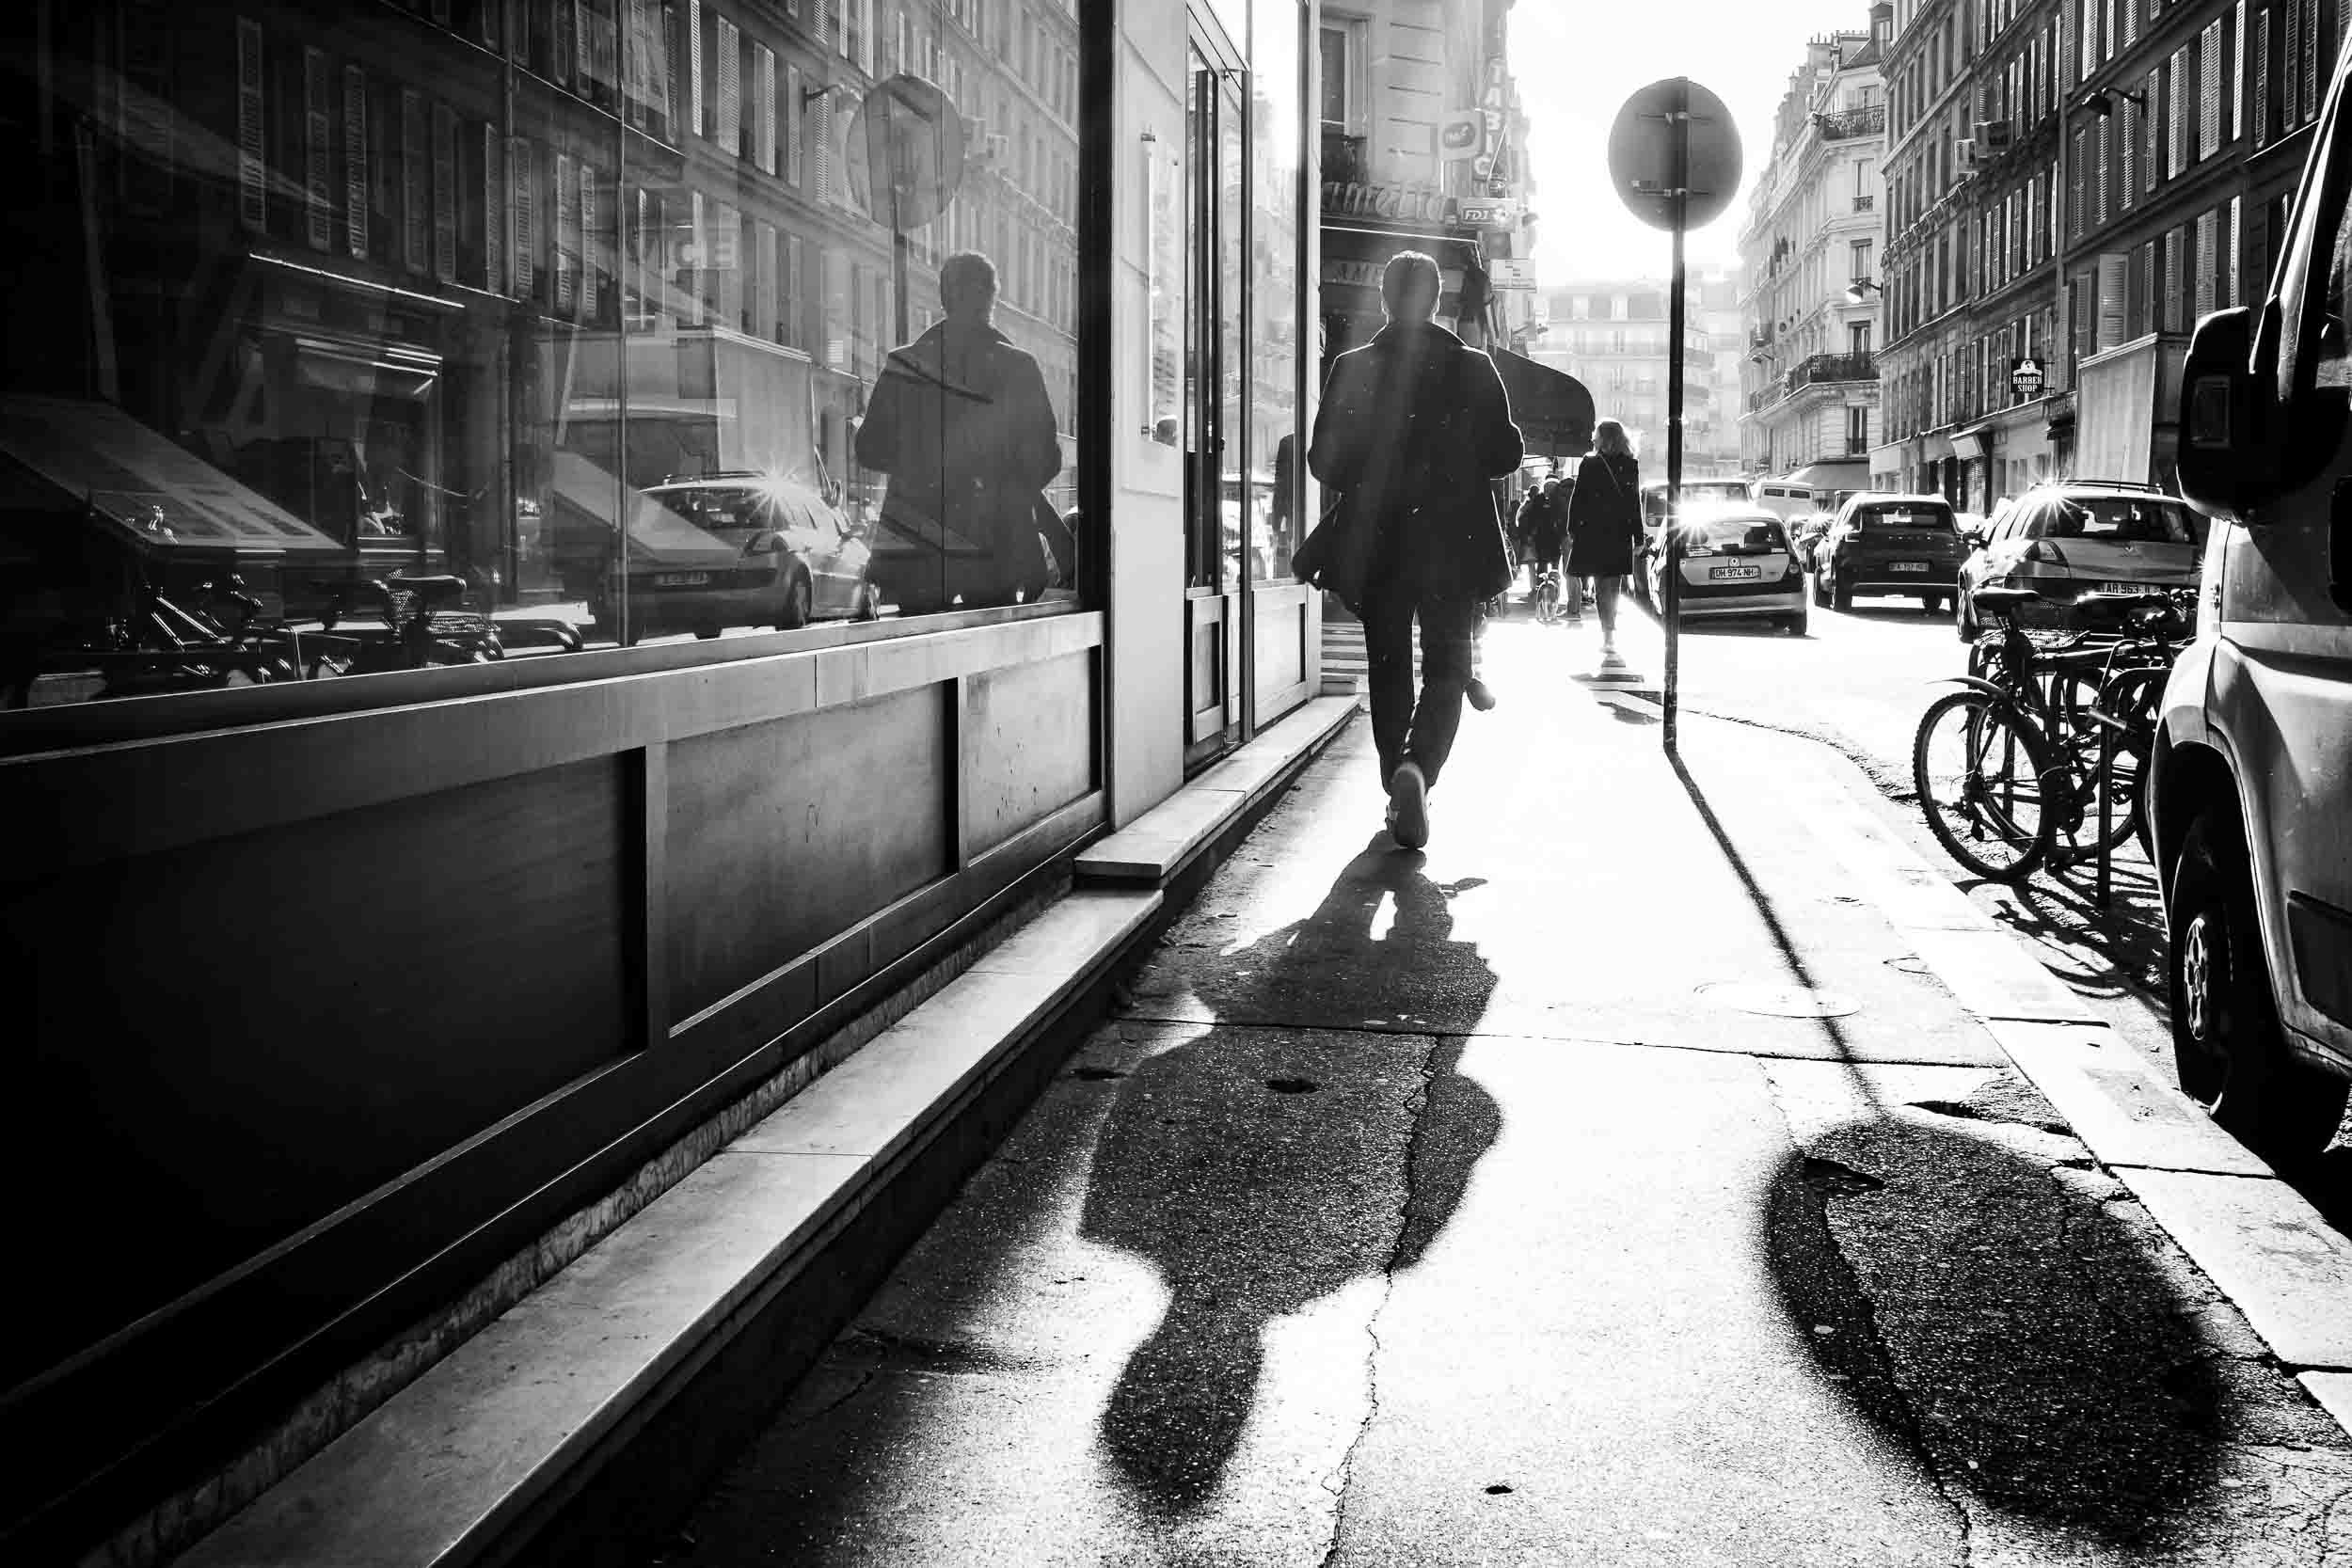 030-shadow-and-reflection-man-waling-street-hard-light-paris.jpg